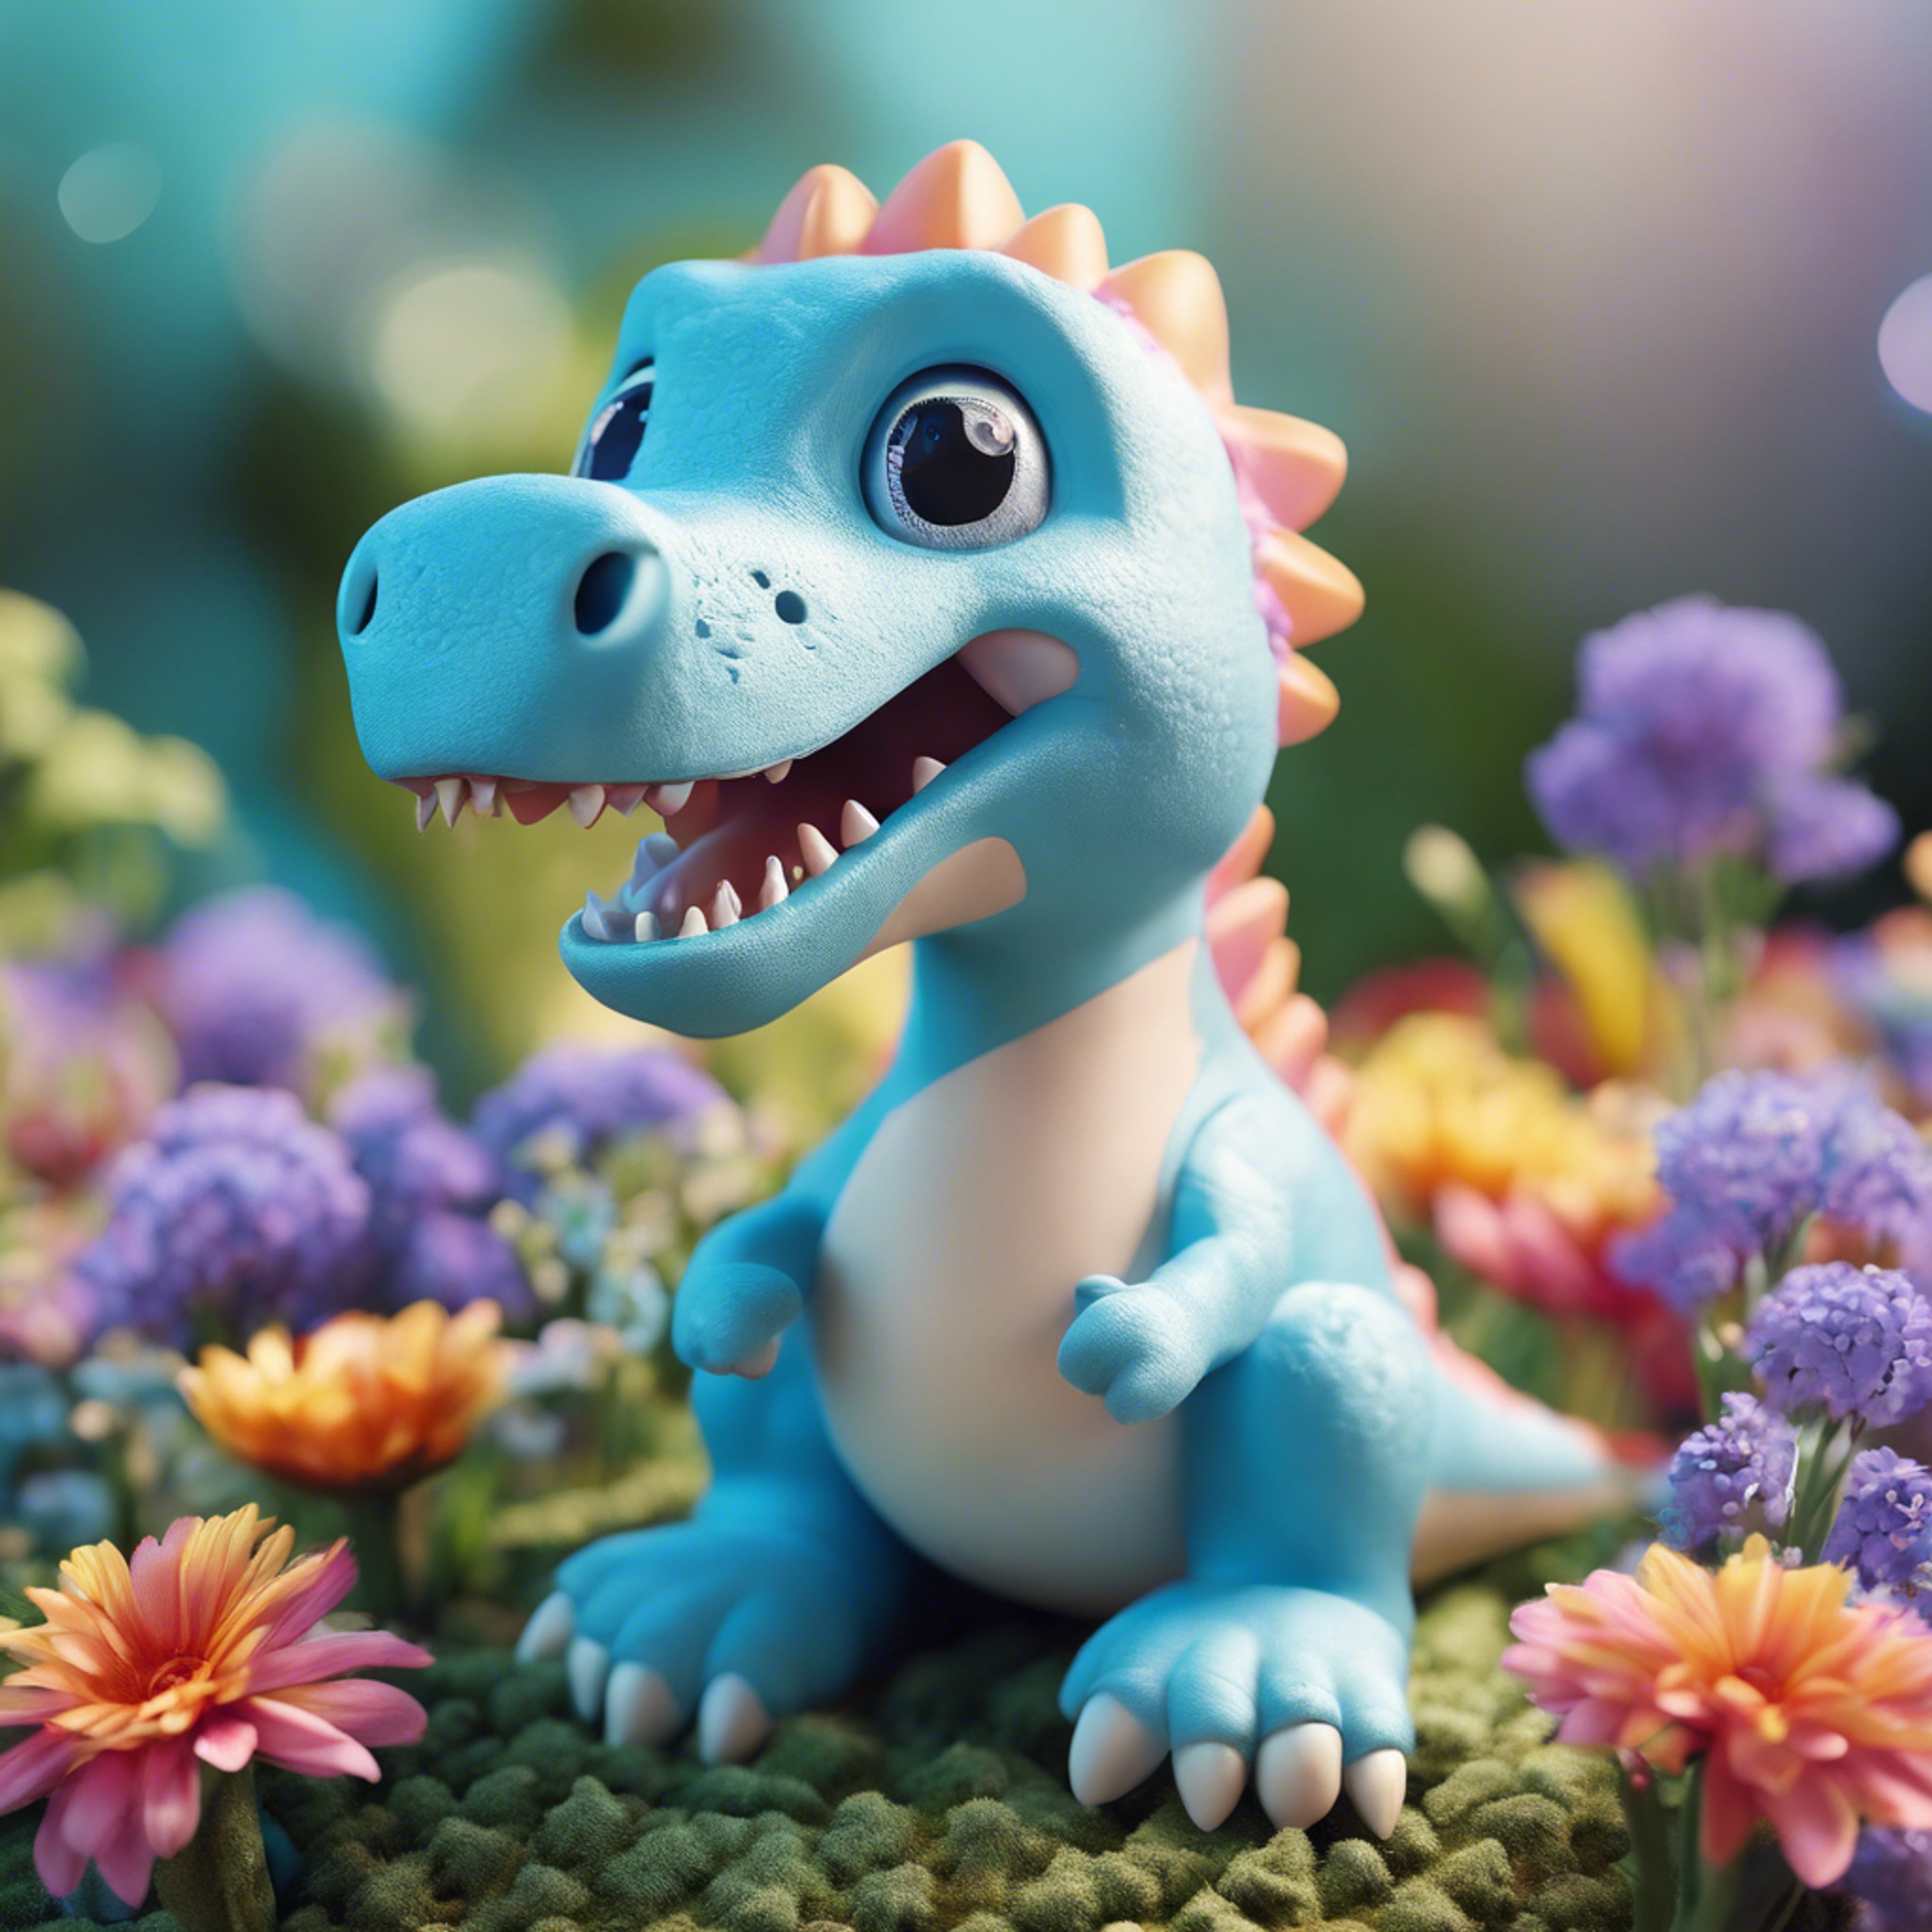 A cute light blue dinosaur with a kawaii expression, surrounded by brightly colored flowers. Divar kağızı[445e6142c59b4fa2886e]